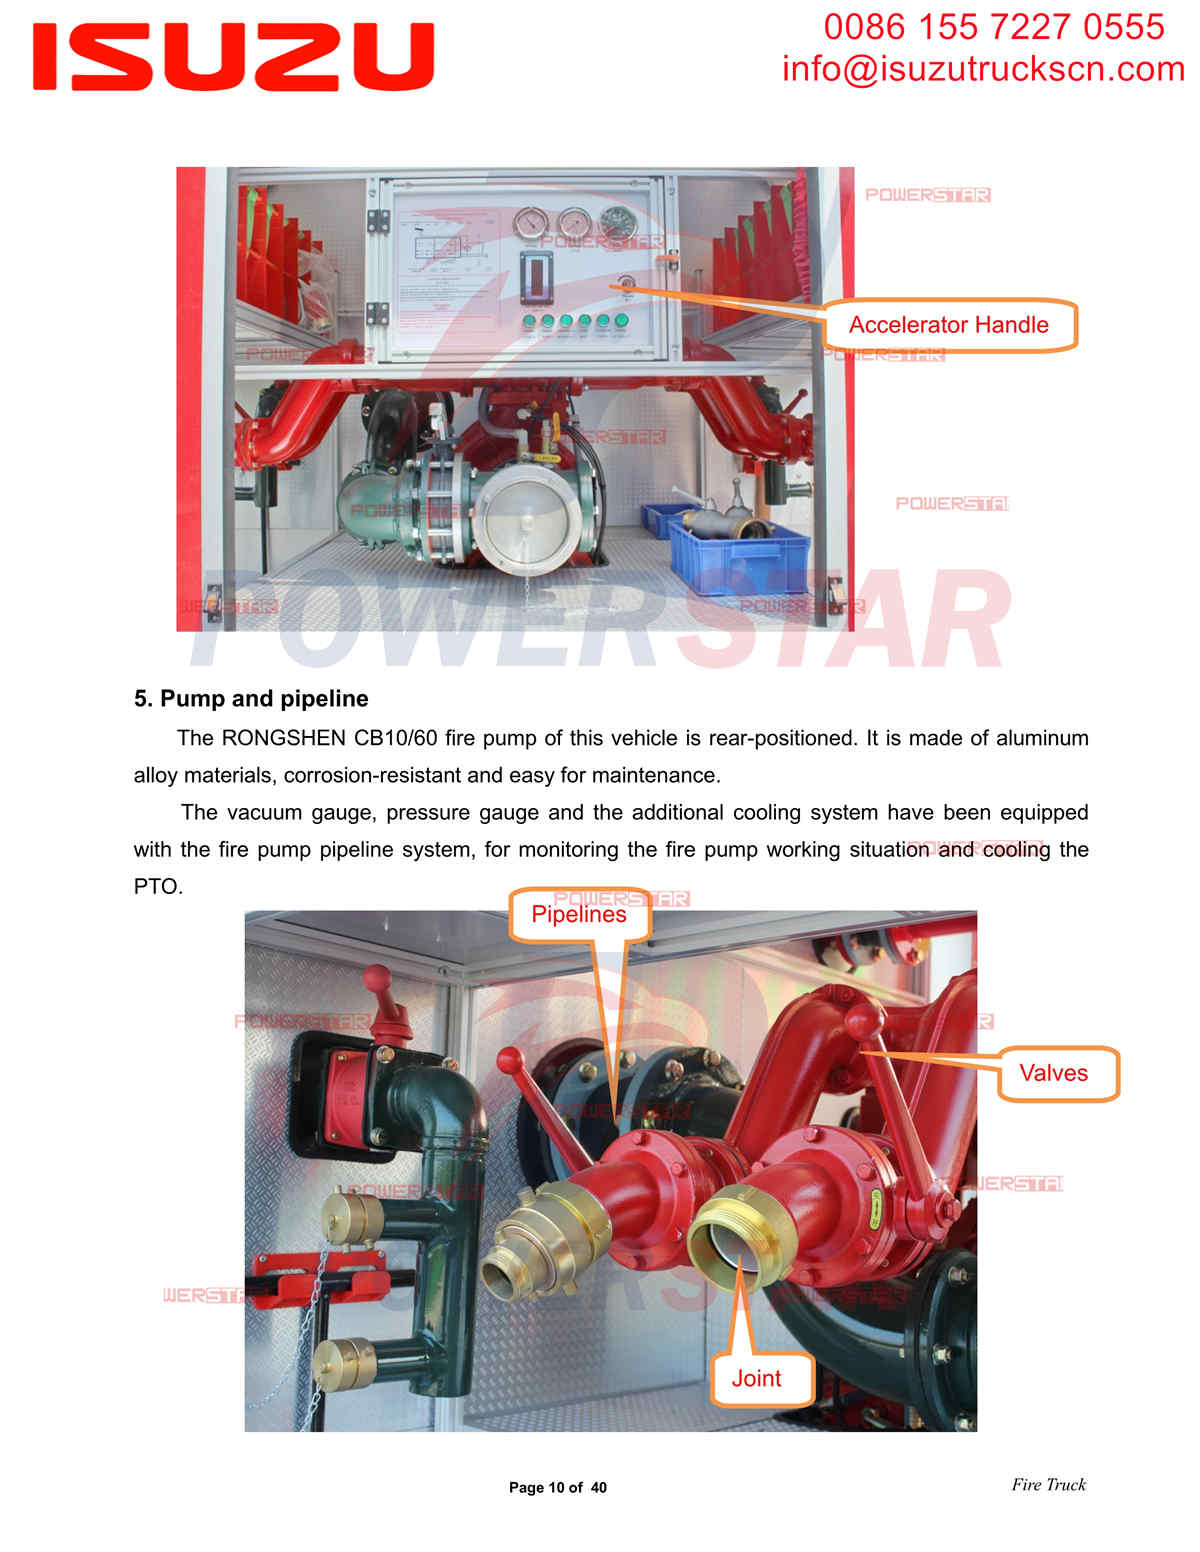 Isuzu fire trucks control panel